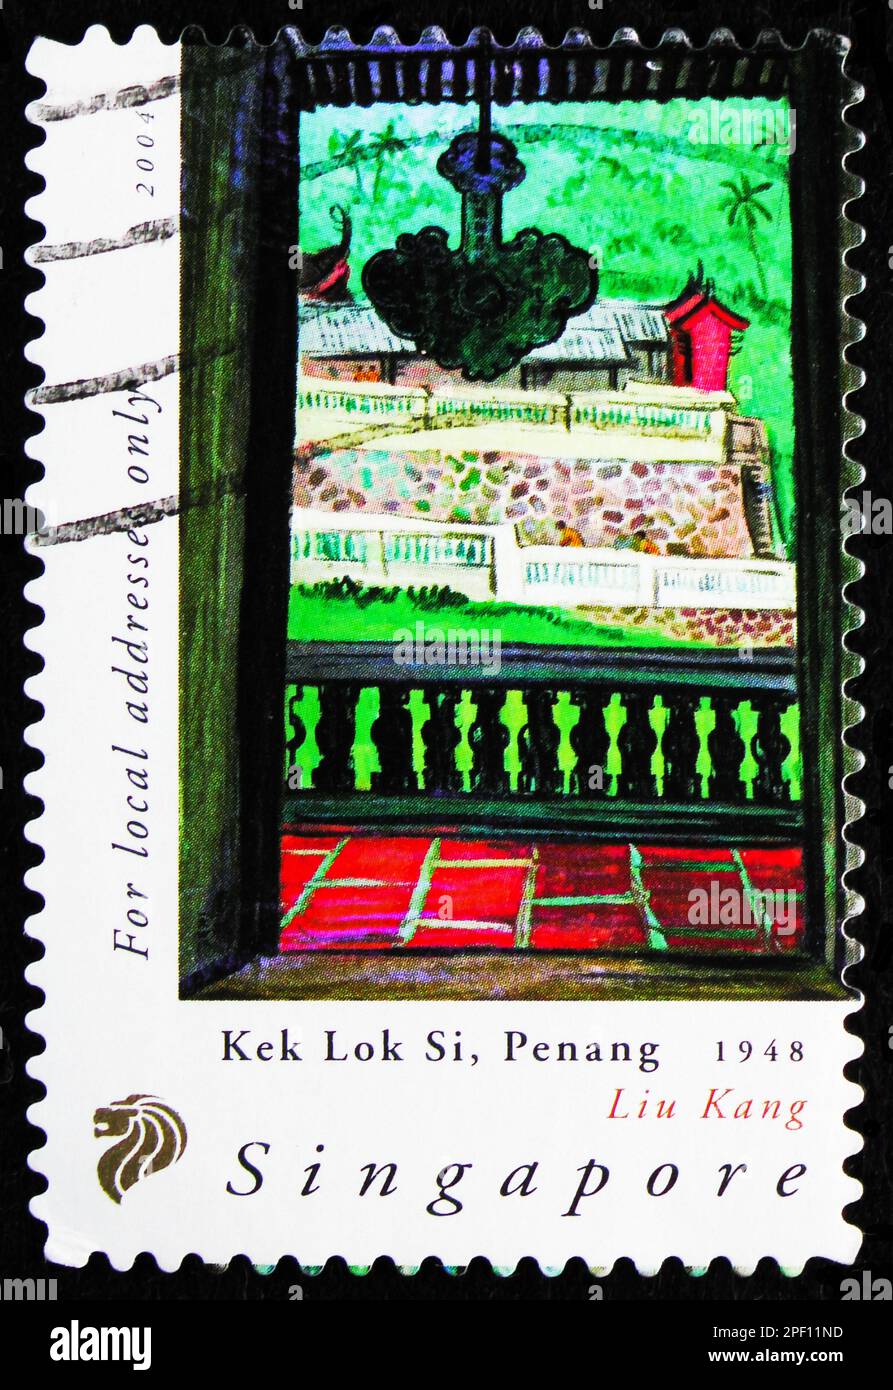 MOSCOW, RUSSIA - FEBRUARY 17, 2023: Postage stamp printed in Singapore shows 'Kek Lok Si, Penang' 1948, Art Series - Liu Kang and Ong Kim Seng serie, Stock Photo